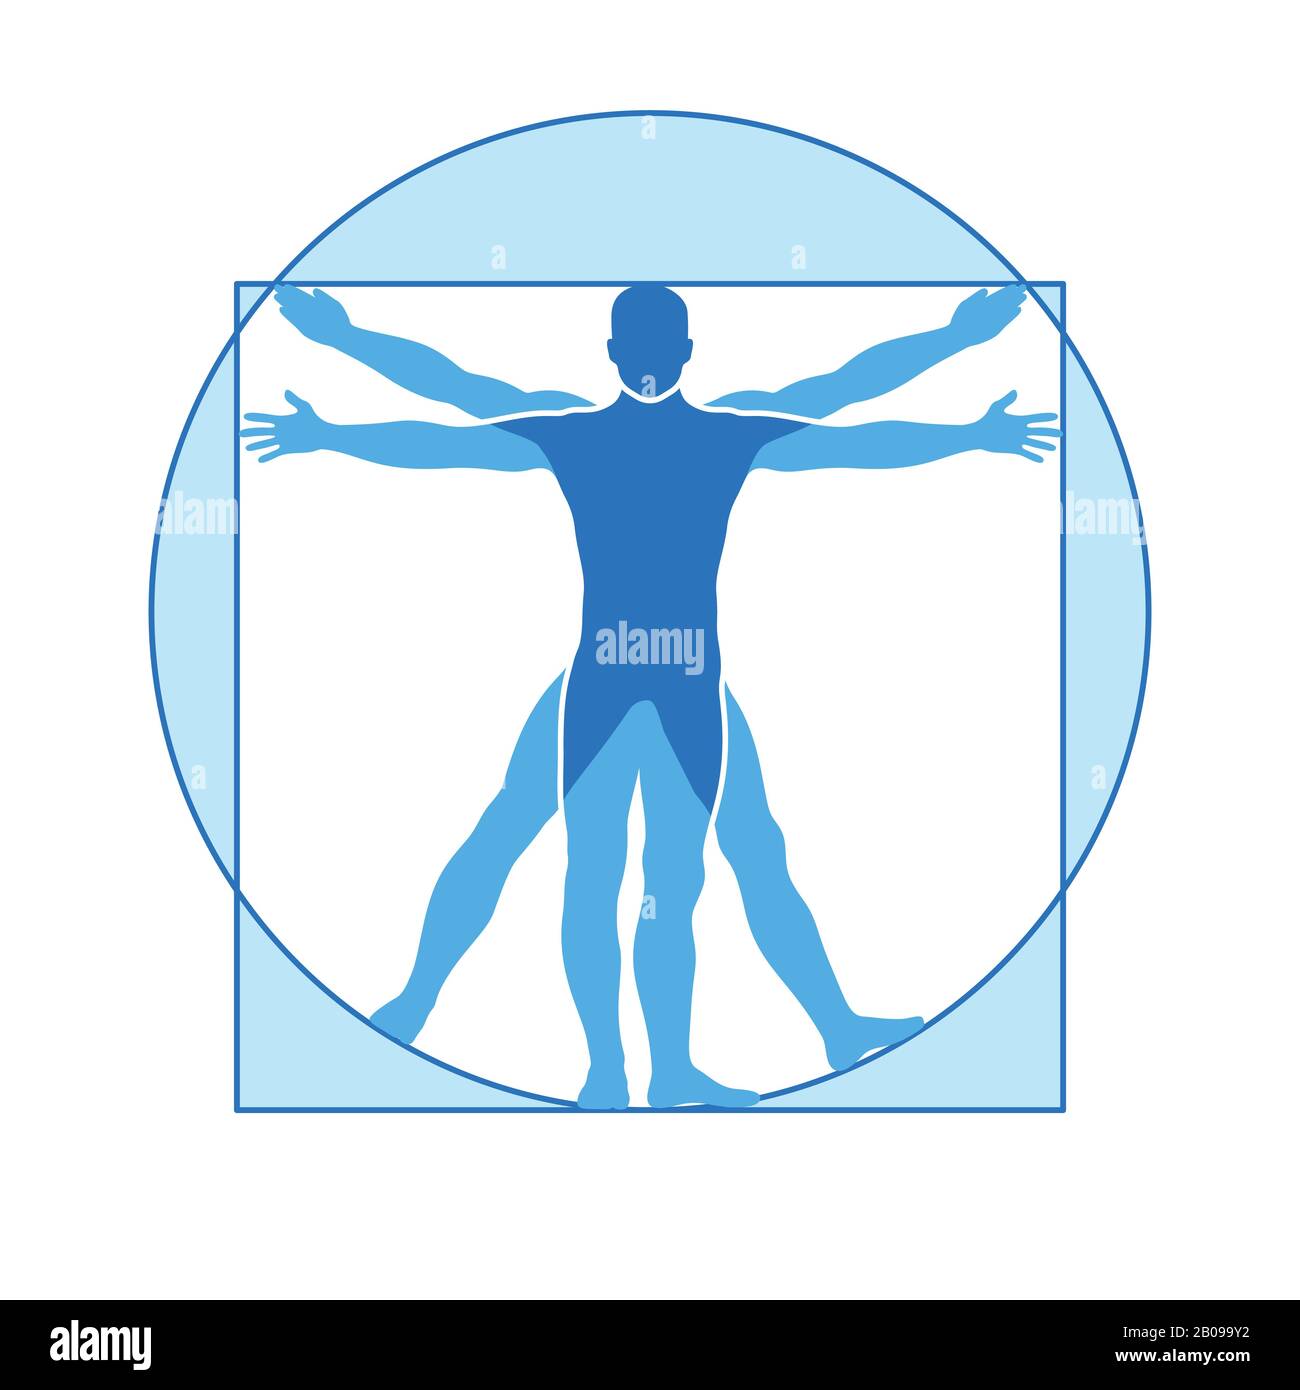 Human body vector icon similar vitruvian man. Like Leonardo da Vinci image vitruvian man, classic proportion form man illustration Stock Vector